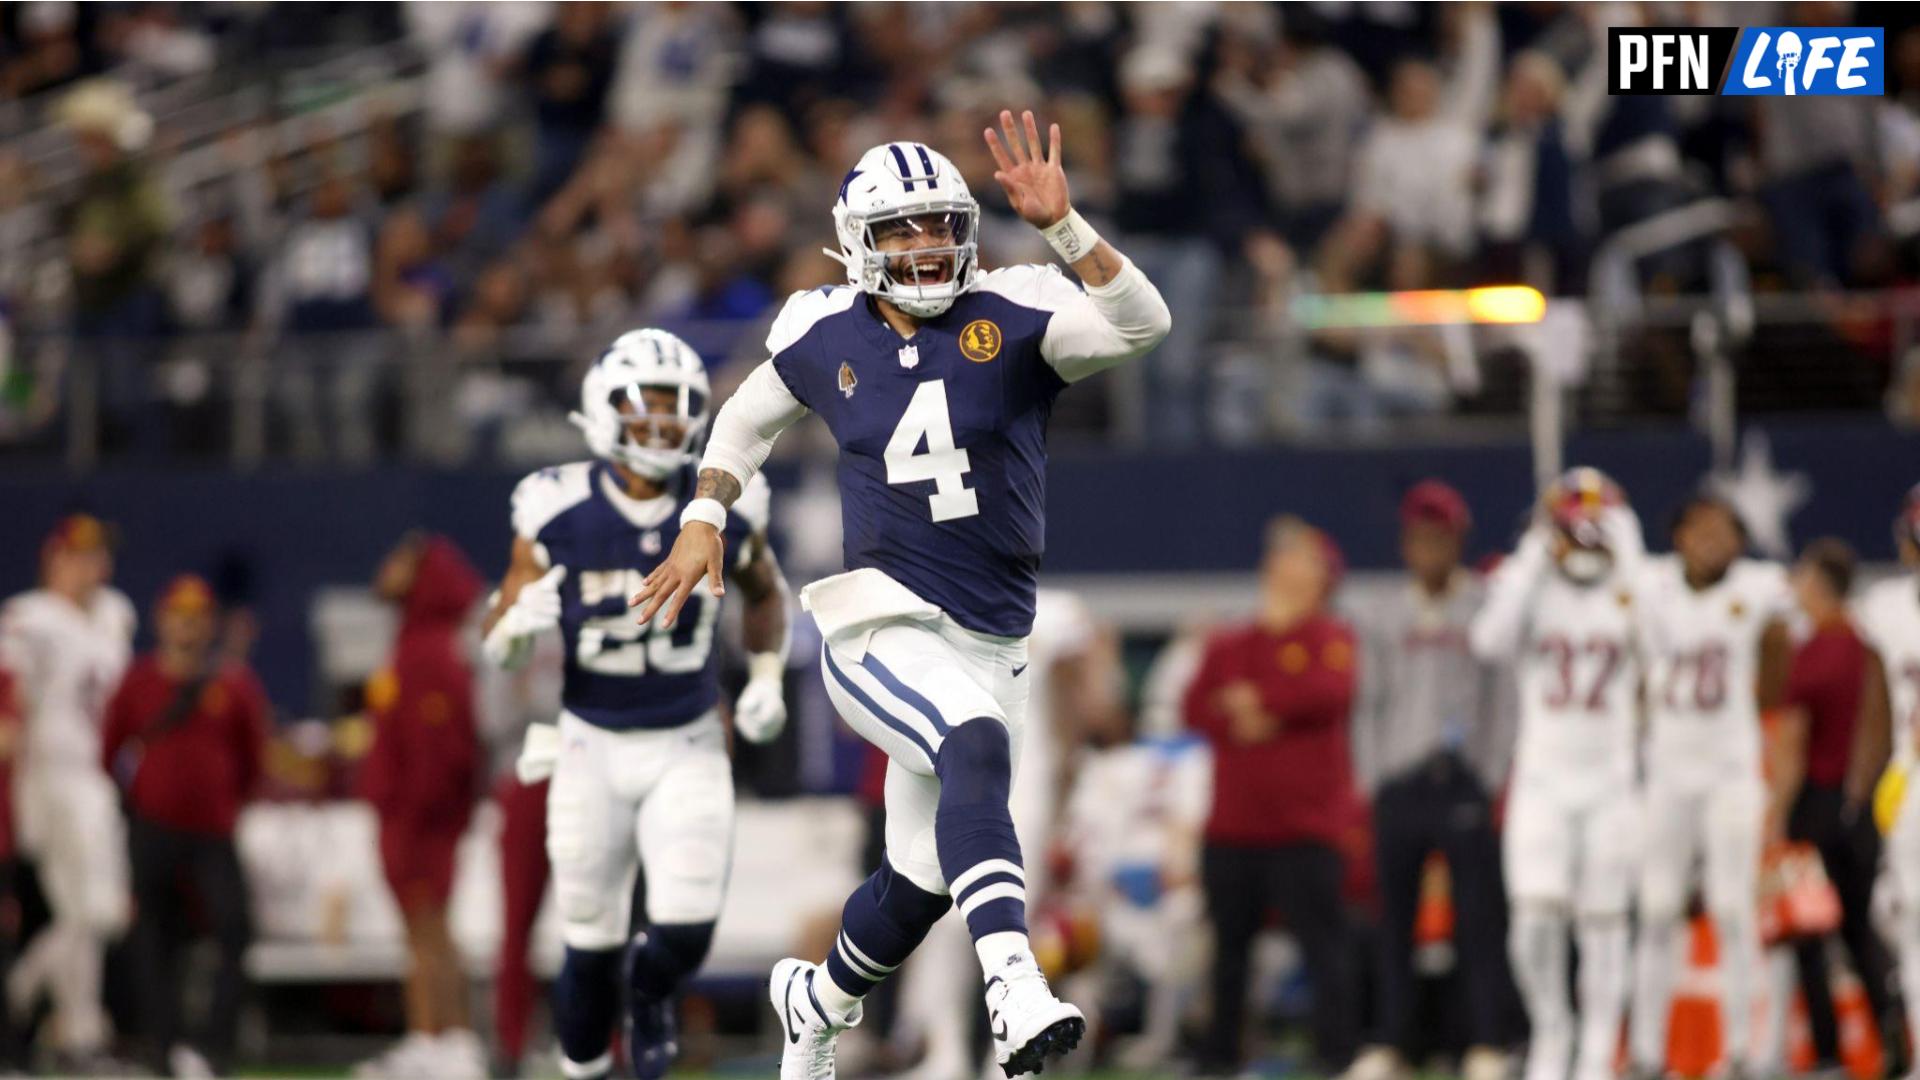 Dallas Cowboys quarterback Dak Prescott (4) celebrates throwing a touchdown in the fourth quarter against the Washington Commanders at AT&T Stadium.